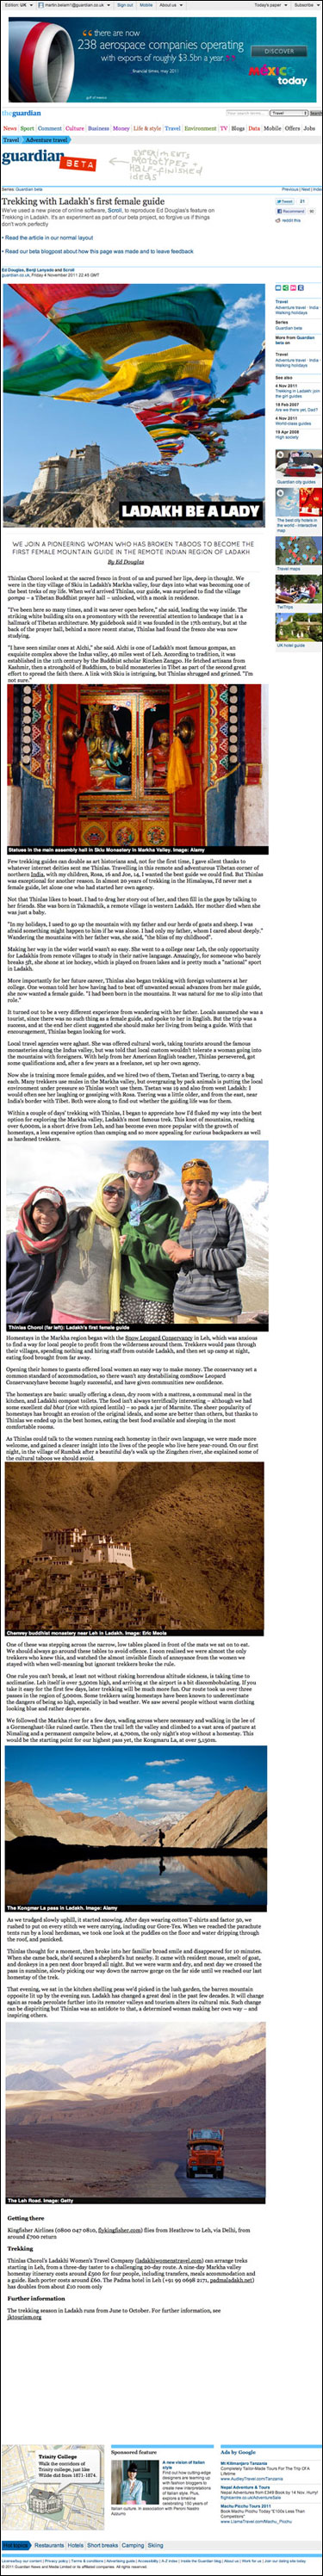 Ladakh article published using Scoll